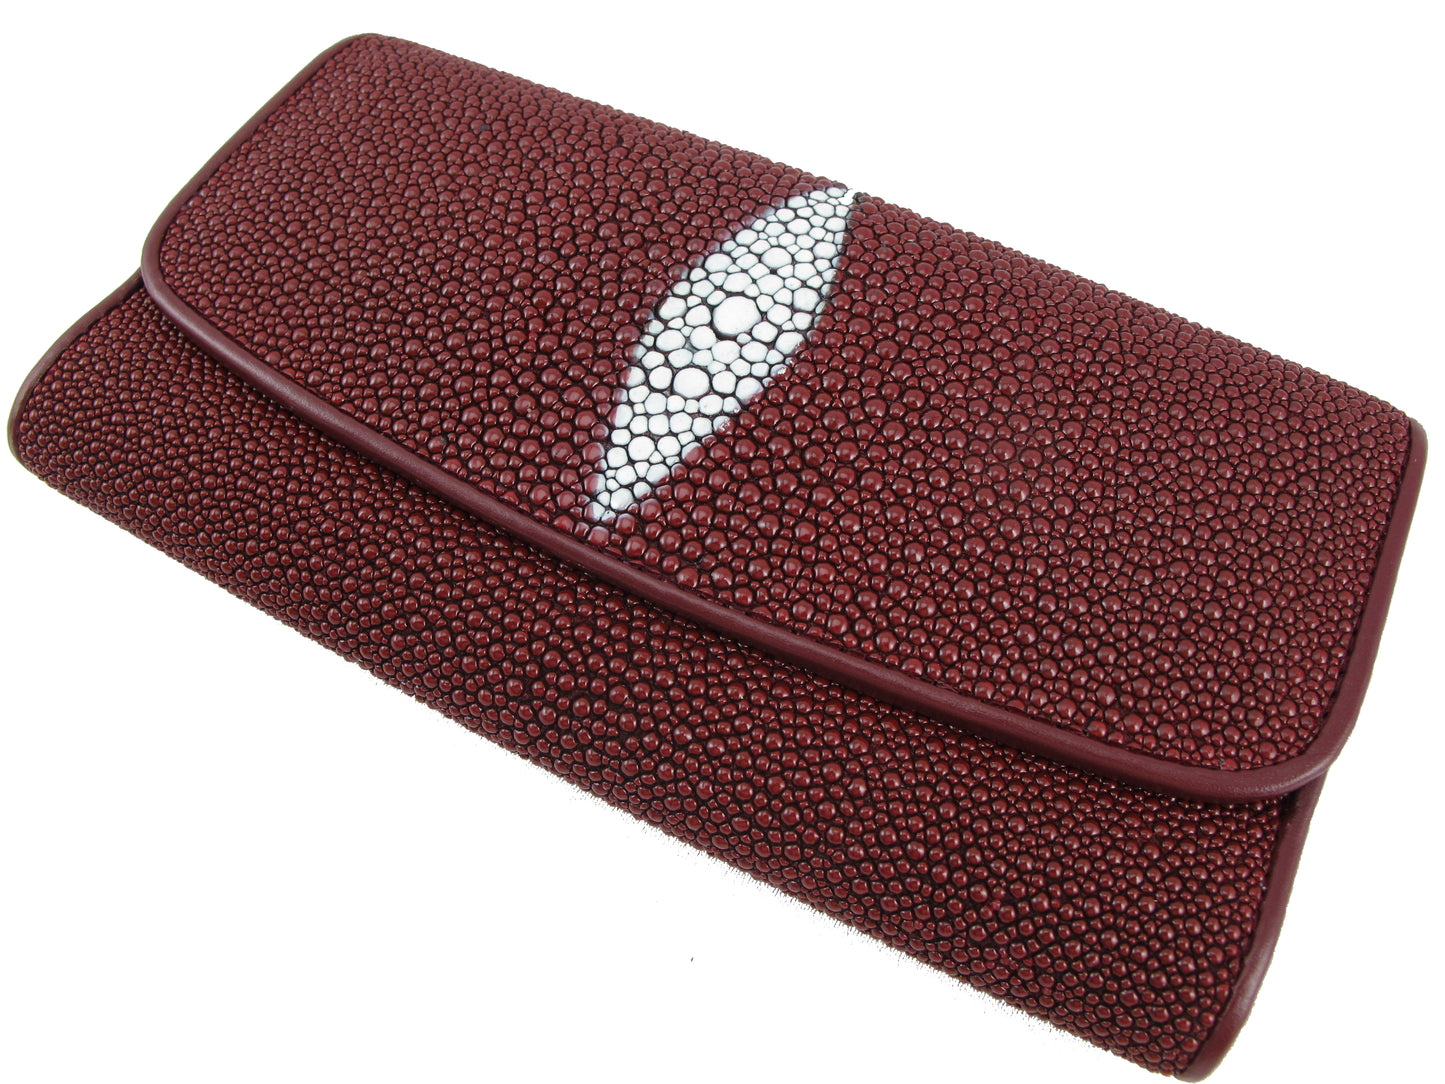 zipper stingray skin leather wallet river| Alibaba.com